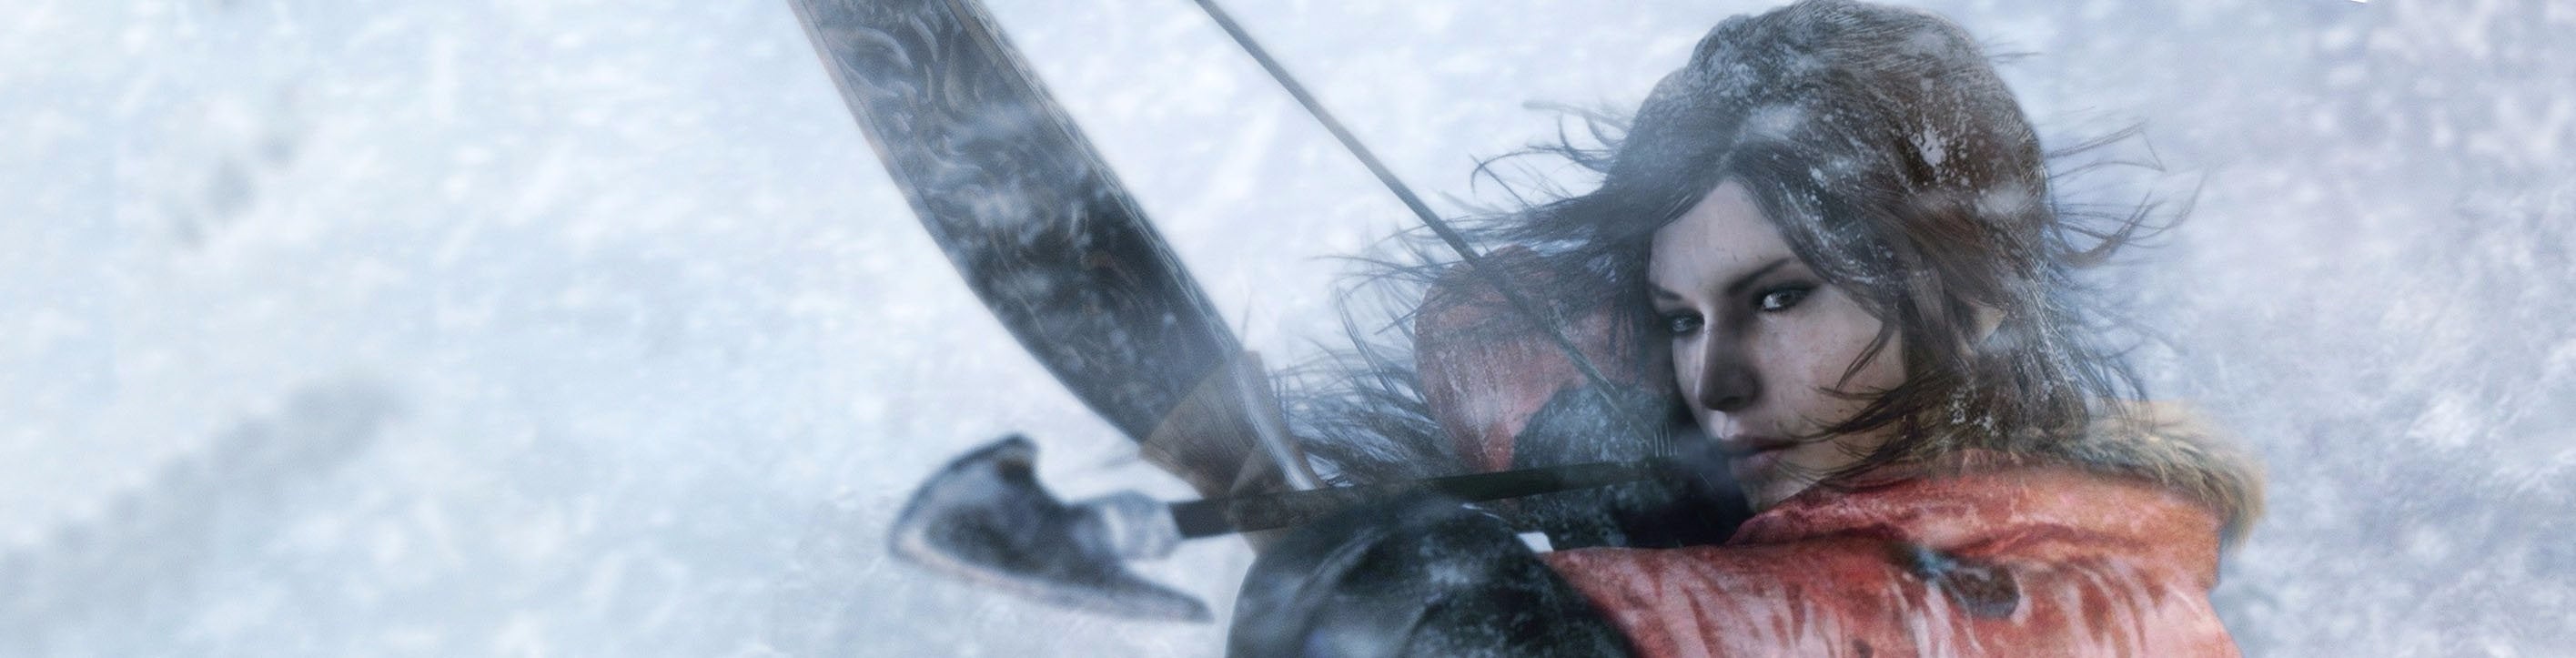 Obrazki dla Digital Foundry kontra Rise of the Tomb Raider na PS4